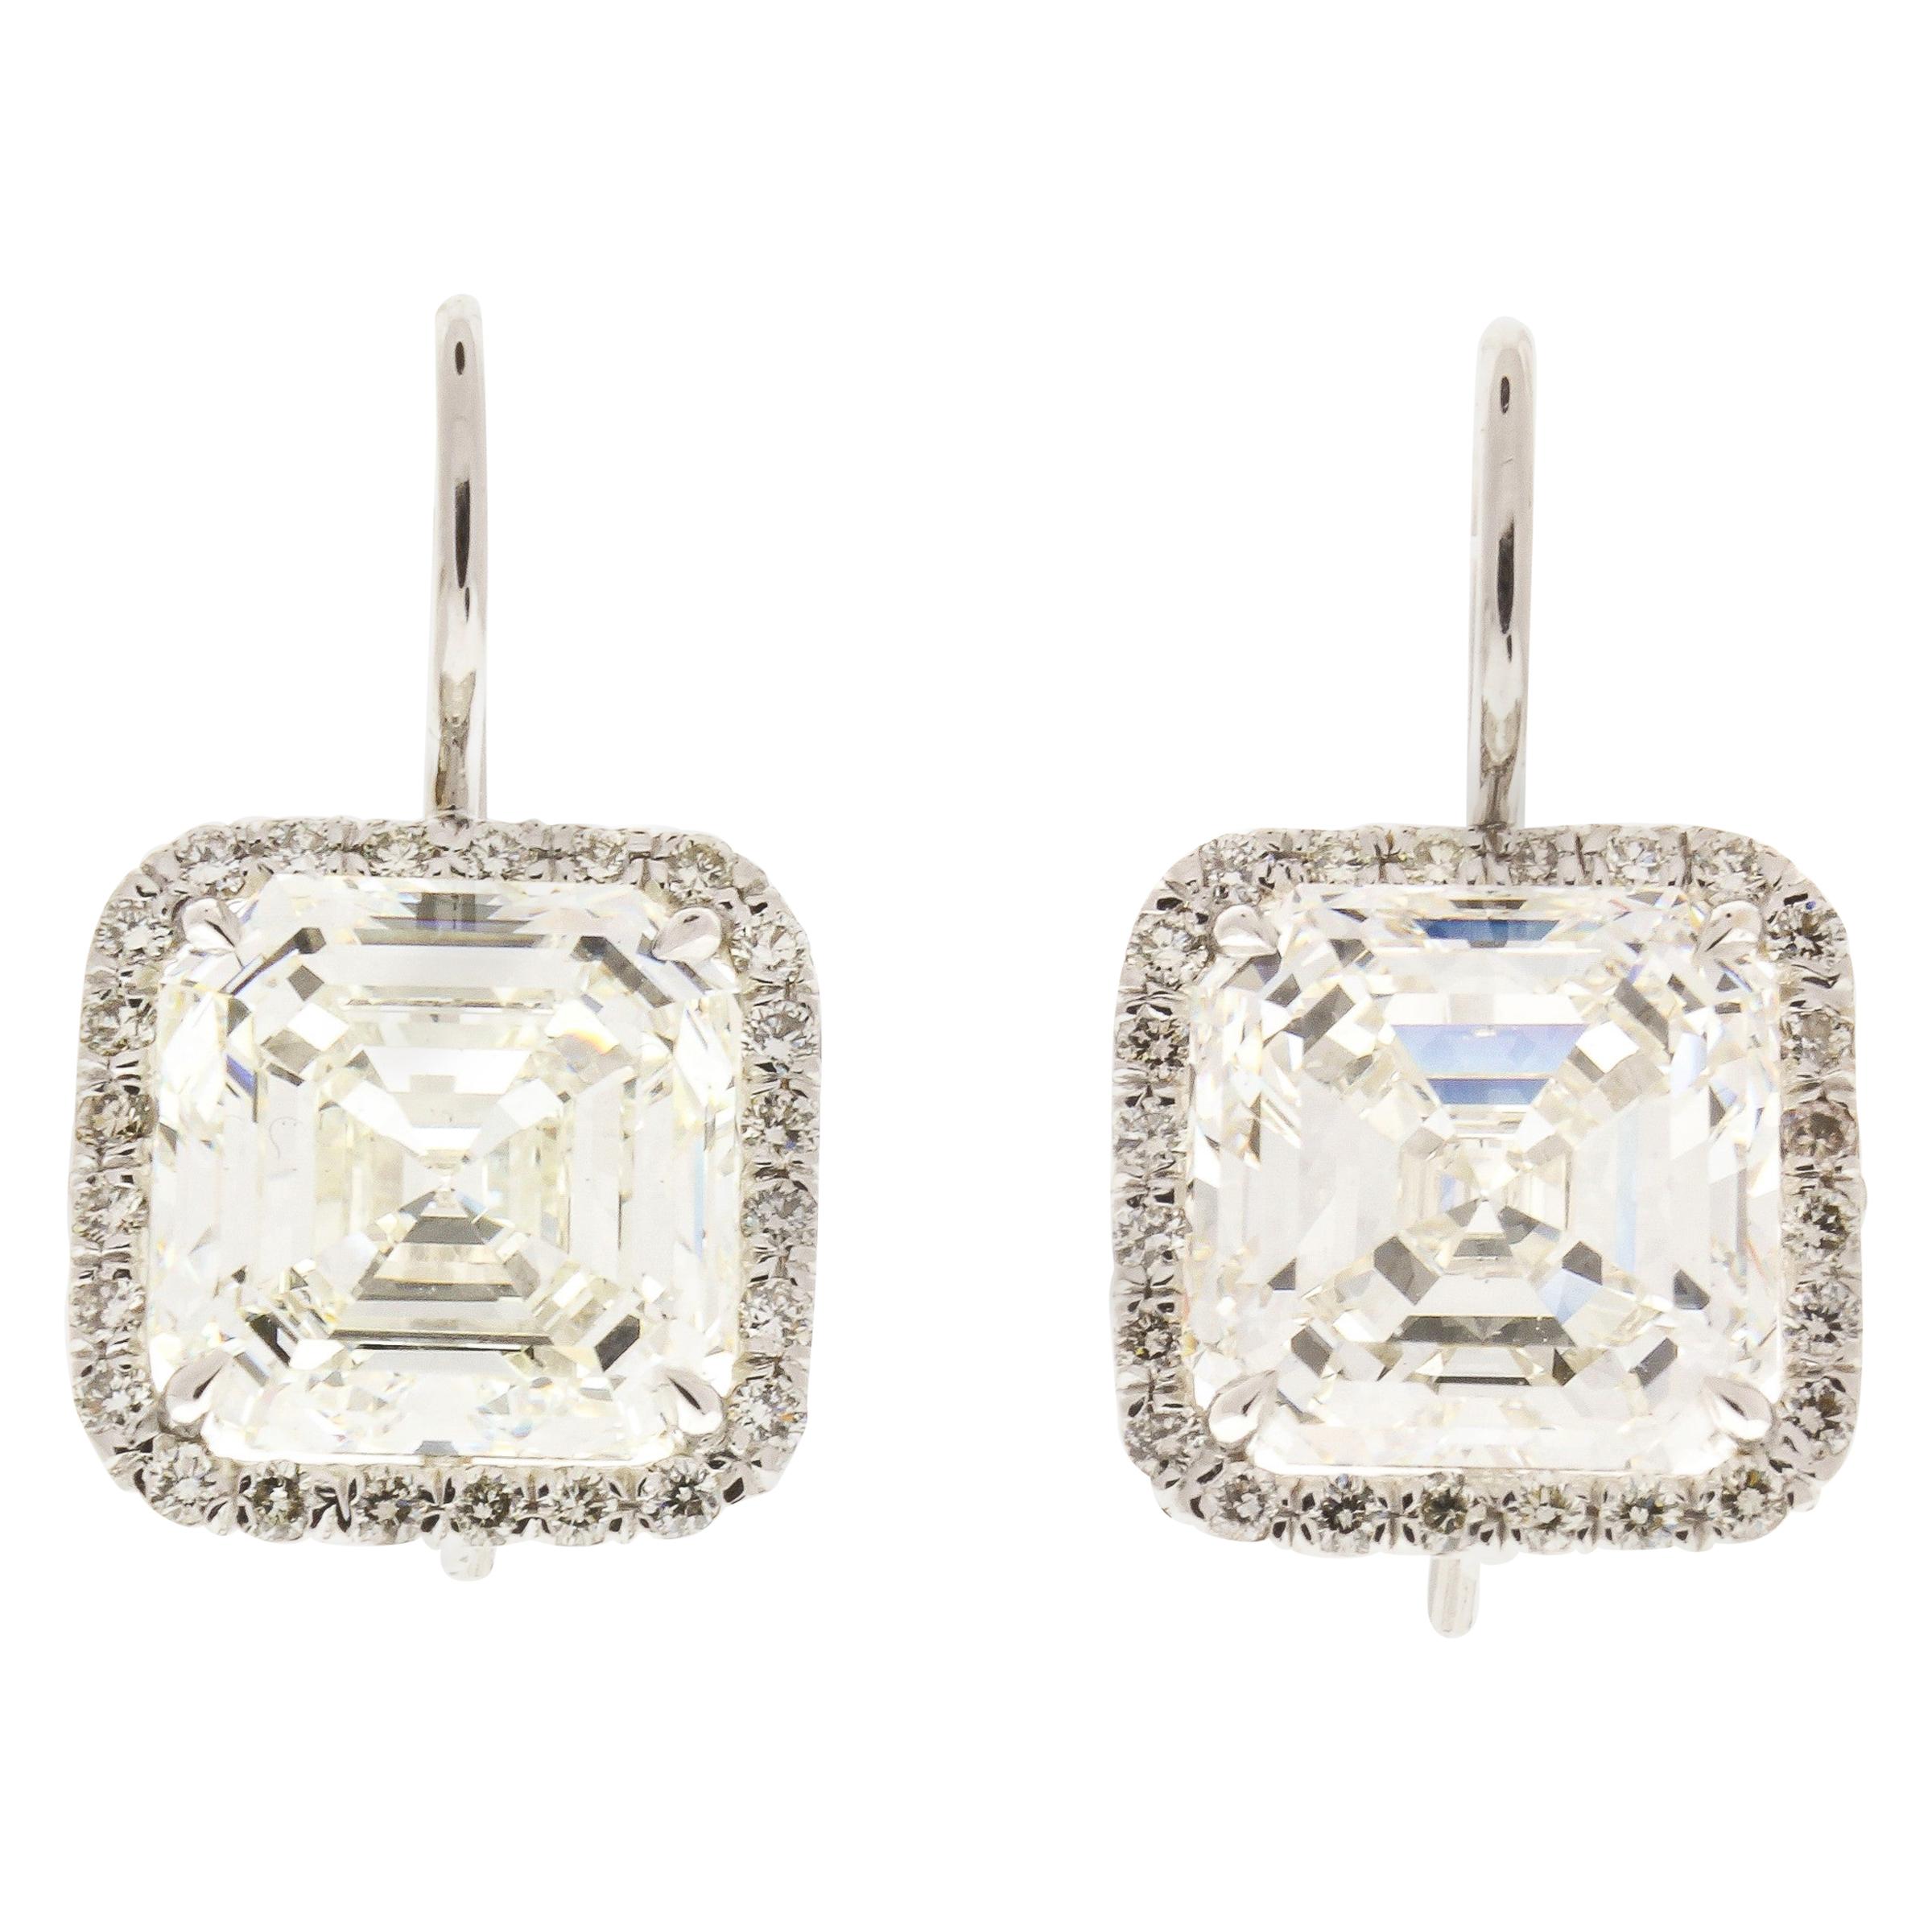 EGL USA Certified 10.04 Carat Total Square Emerald Cut Diamond Earrings in 18 K For Sale